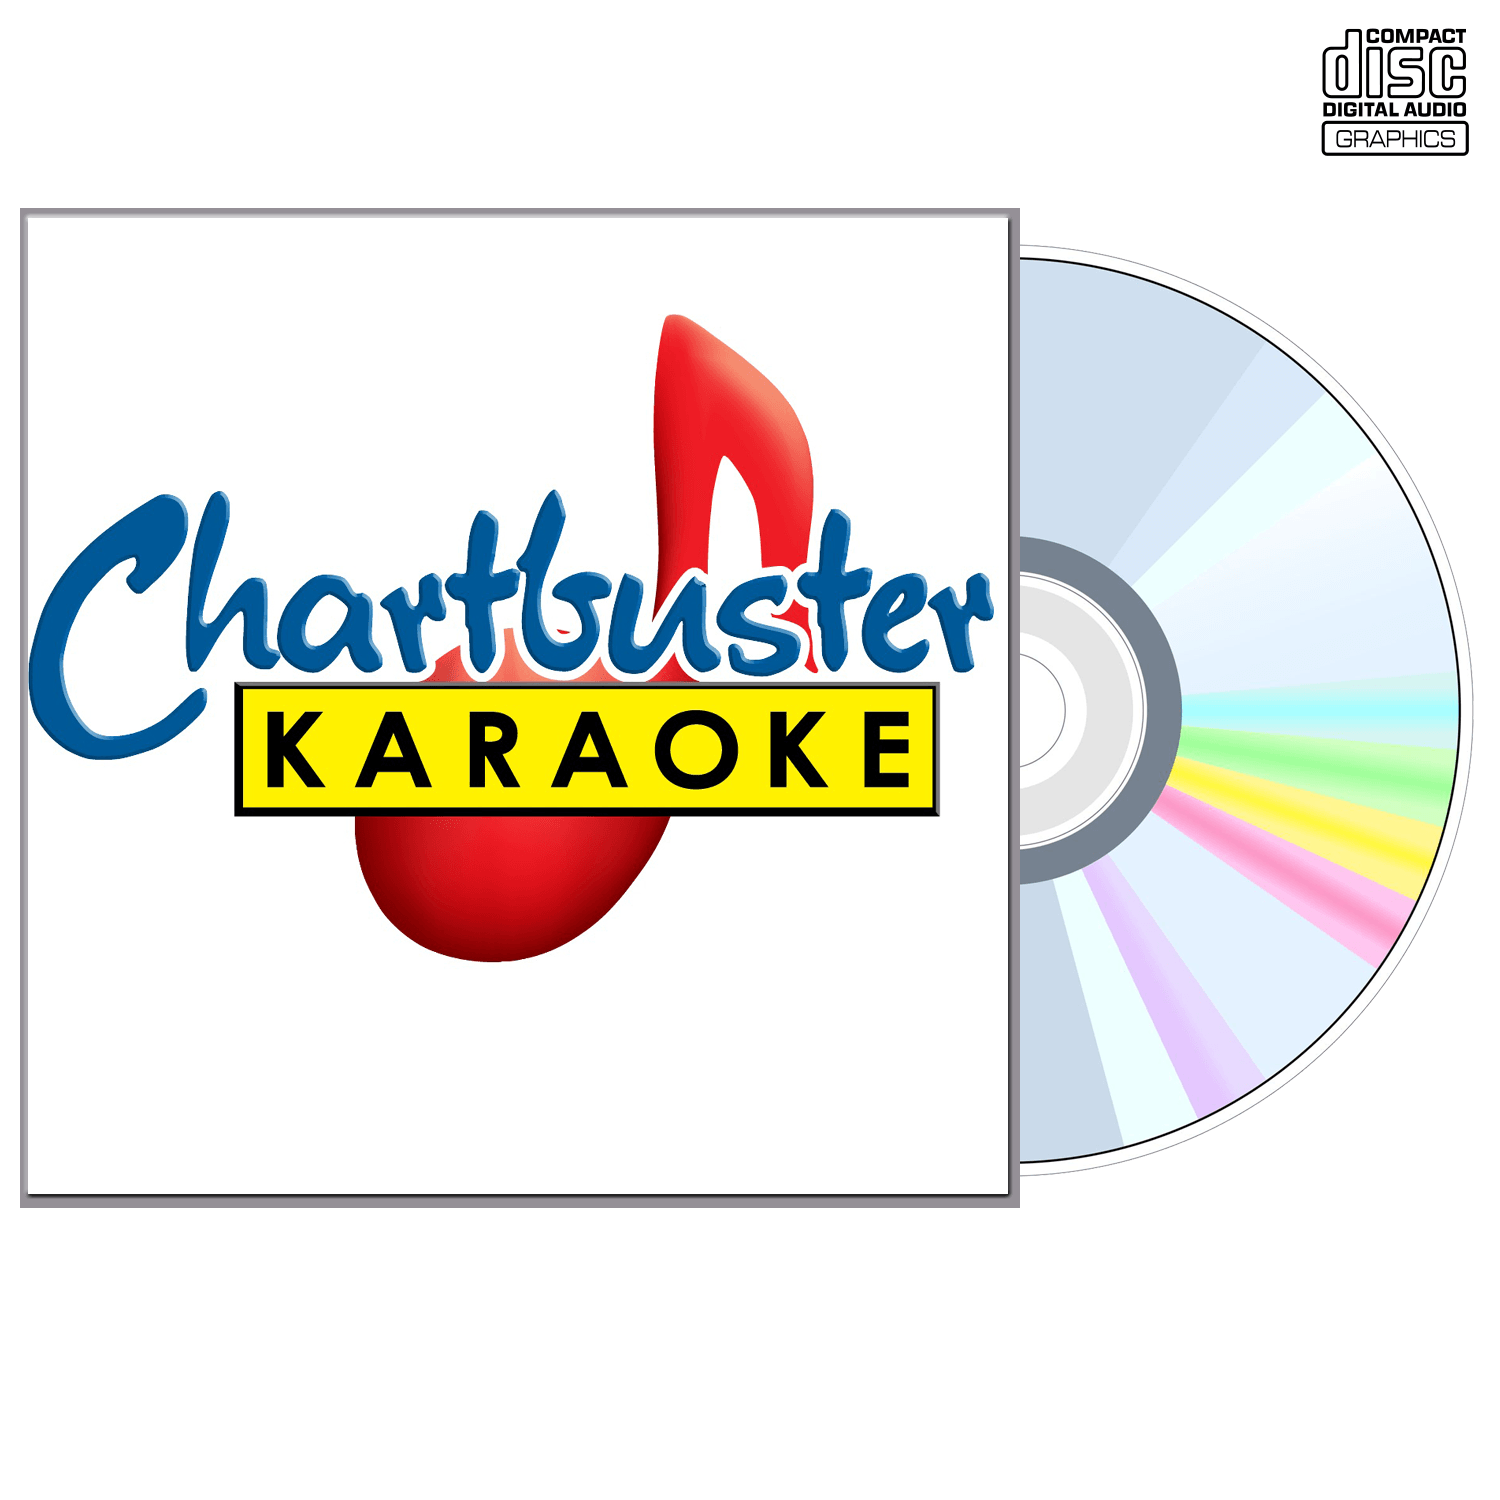 Barry Manilow Vol 2 - CD+G - Chartbuster Karaoke - Karaoke Home Entertainment